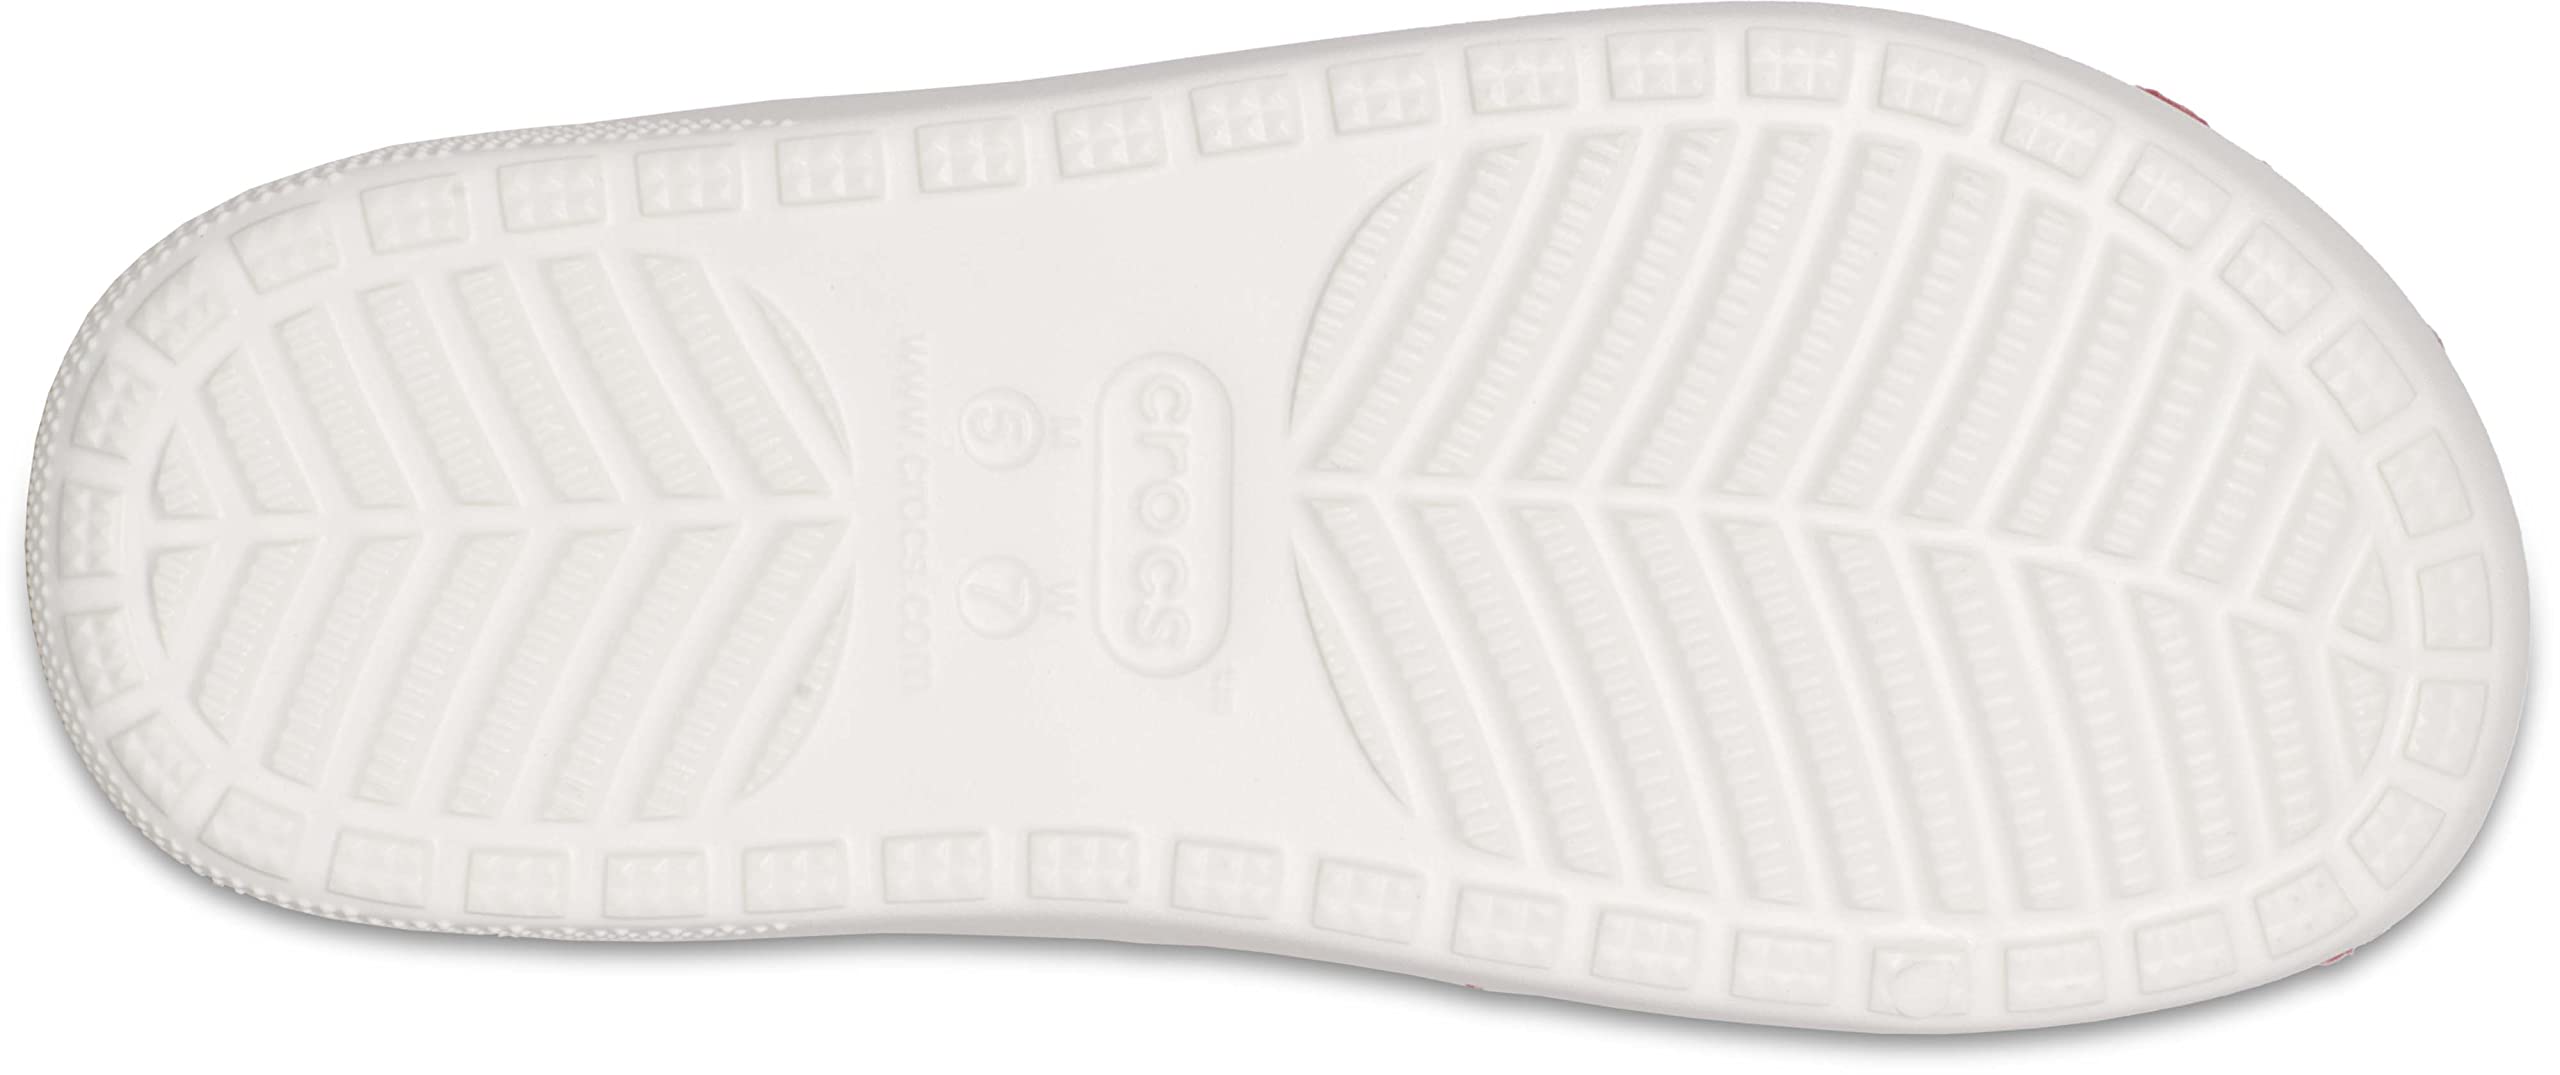 Crocs Unisex-Adult Classic Cozzzy Platform Sandals | Fuzzy Slippers Slide